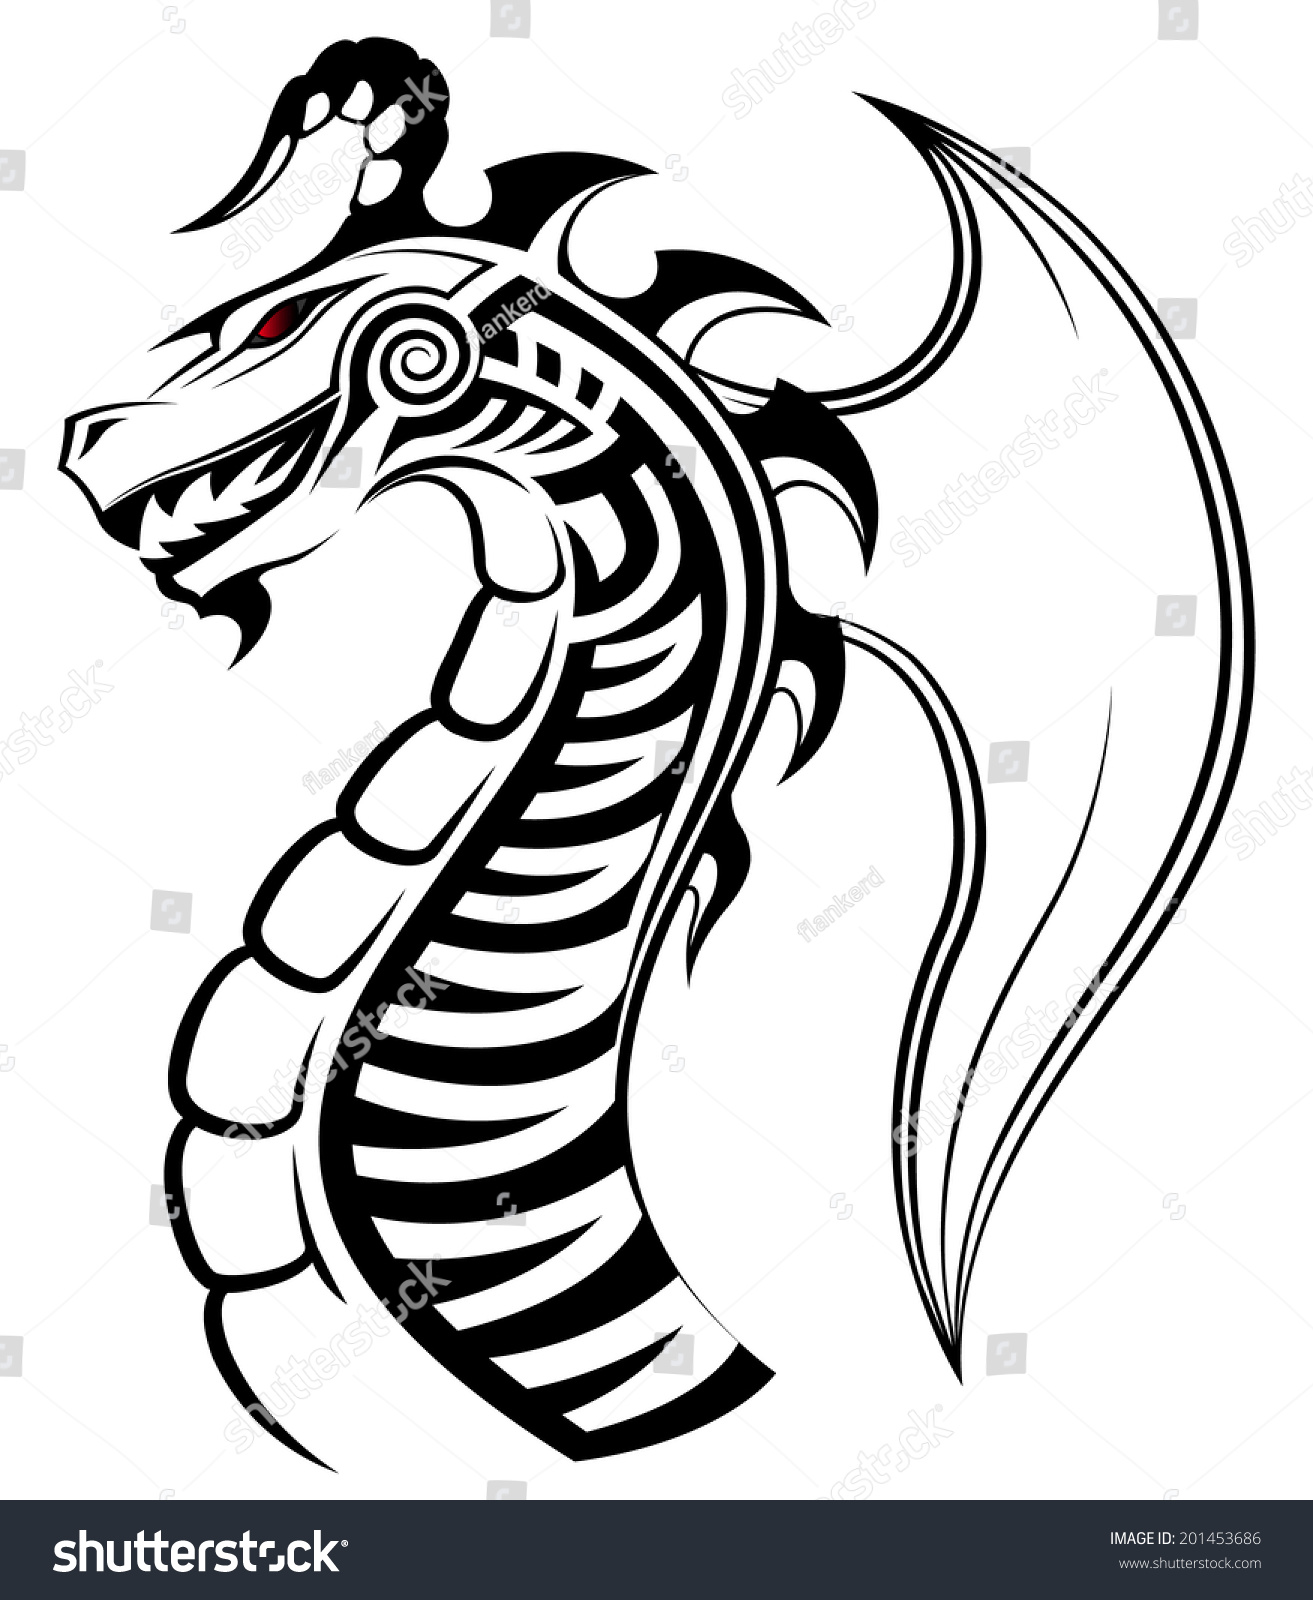 Vector Image Dragon Tattoo Stock Vector (Royalty Free) 201453686